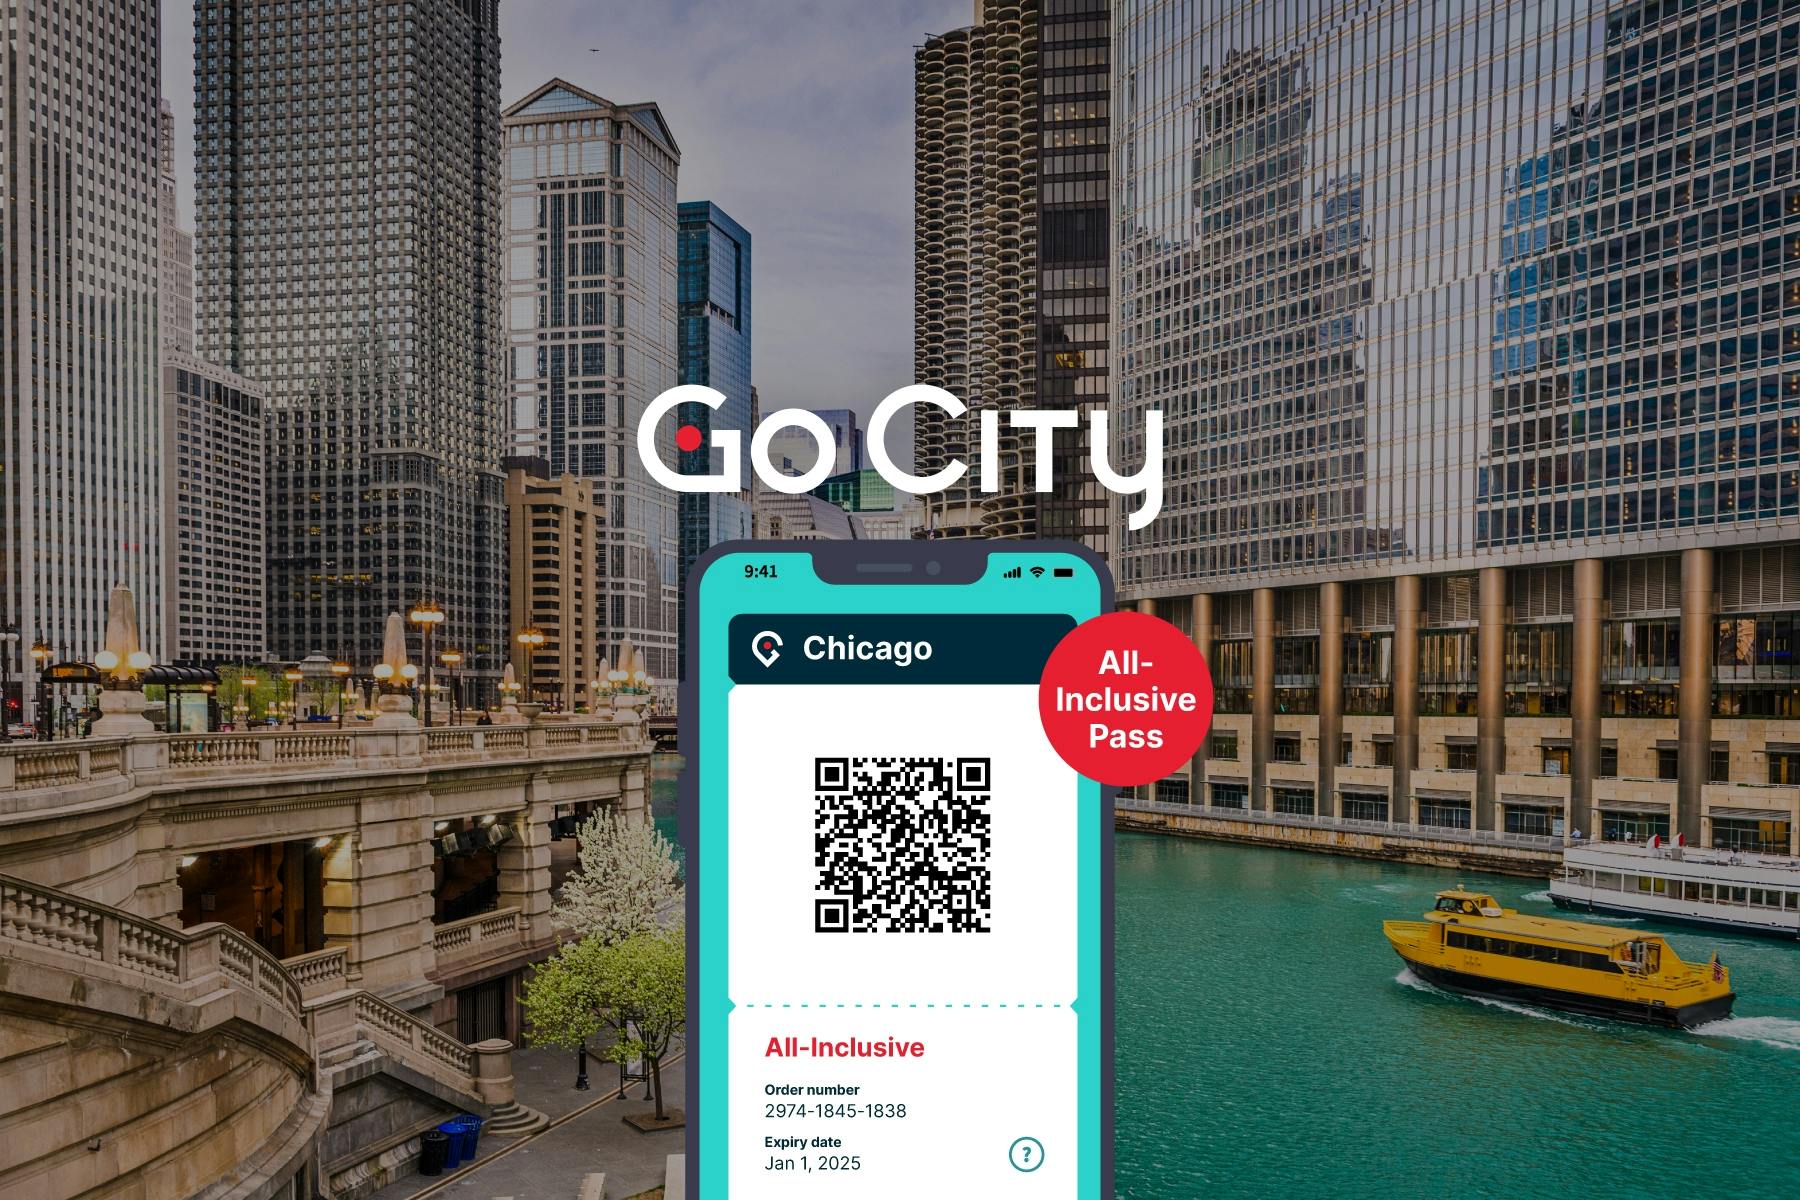 Go City | Chicago All-Inclusive Pass